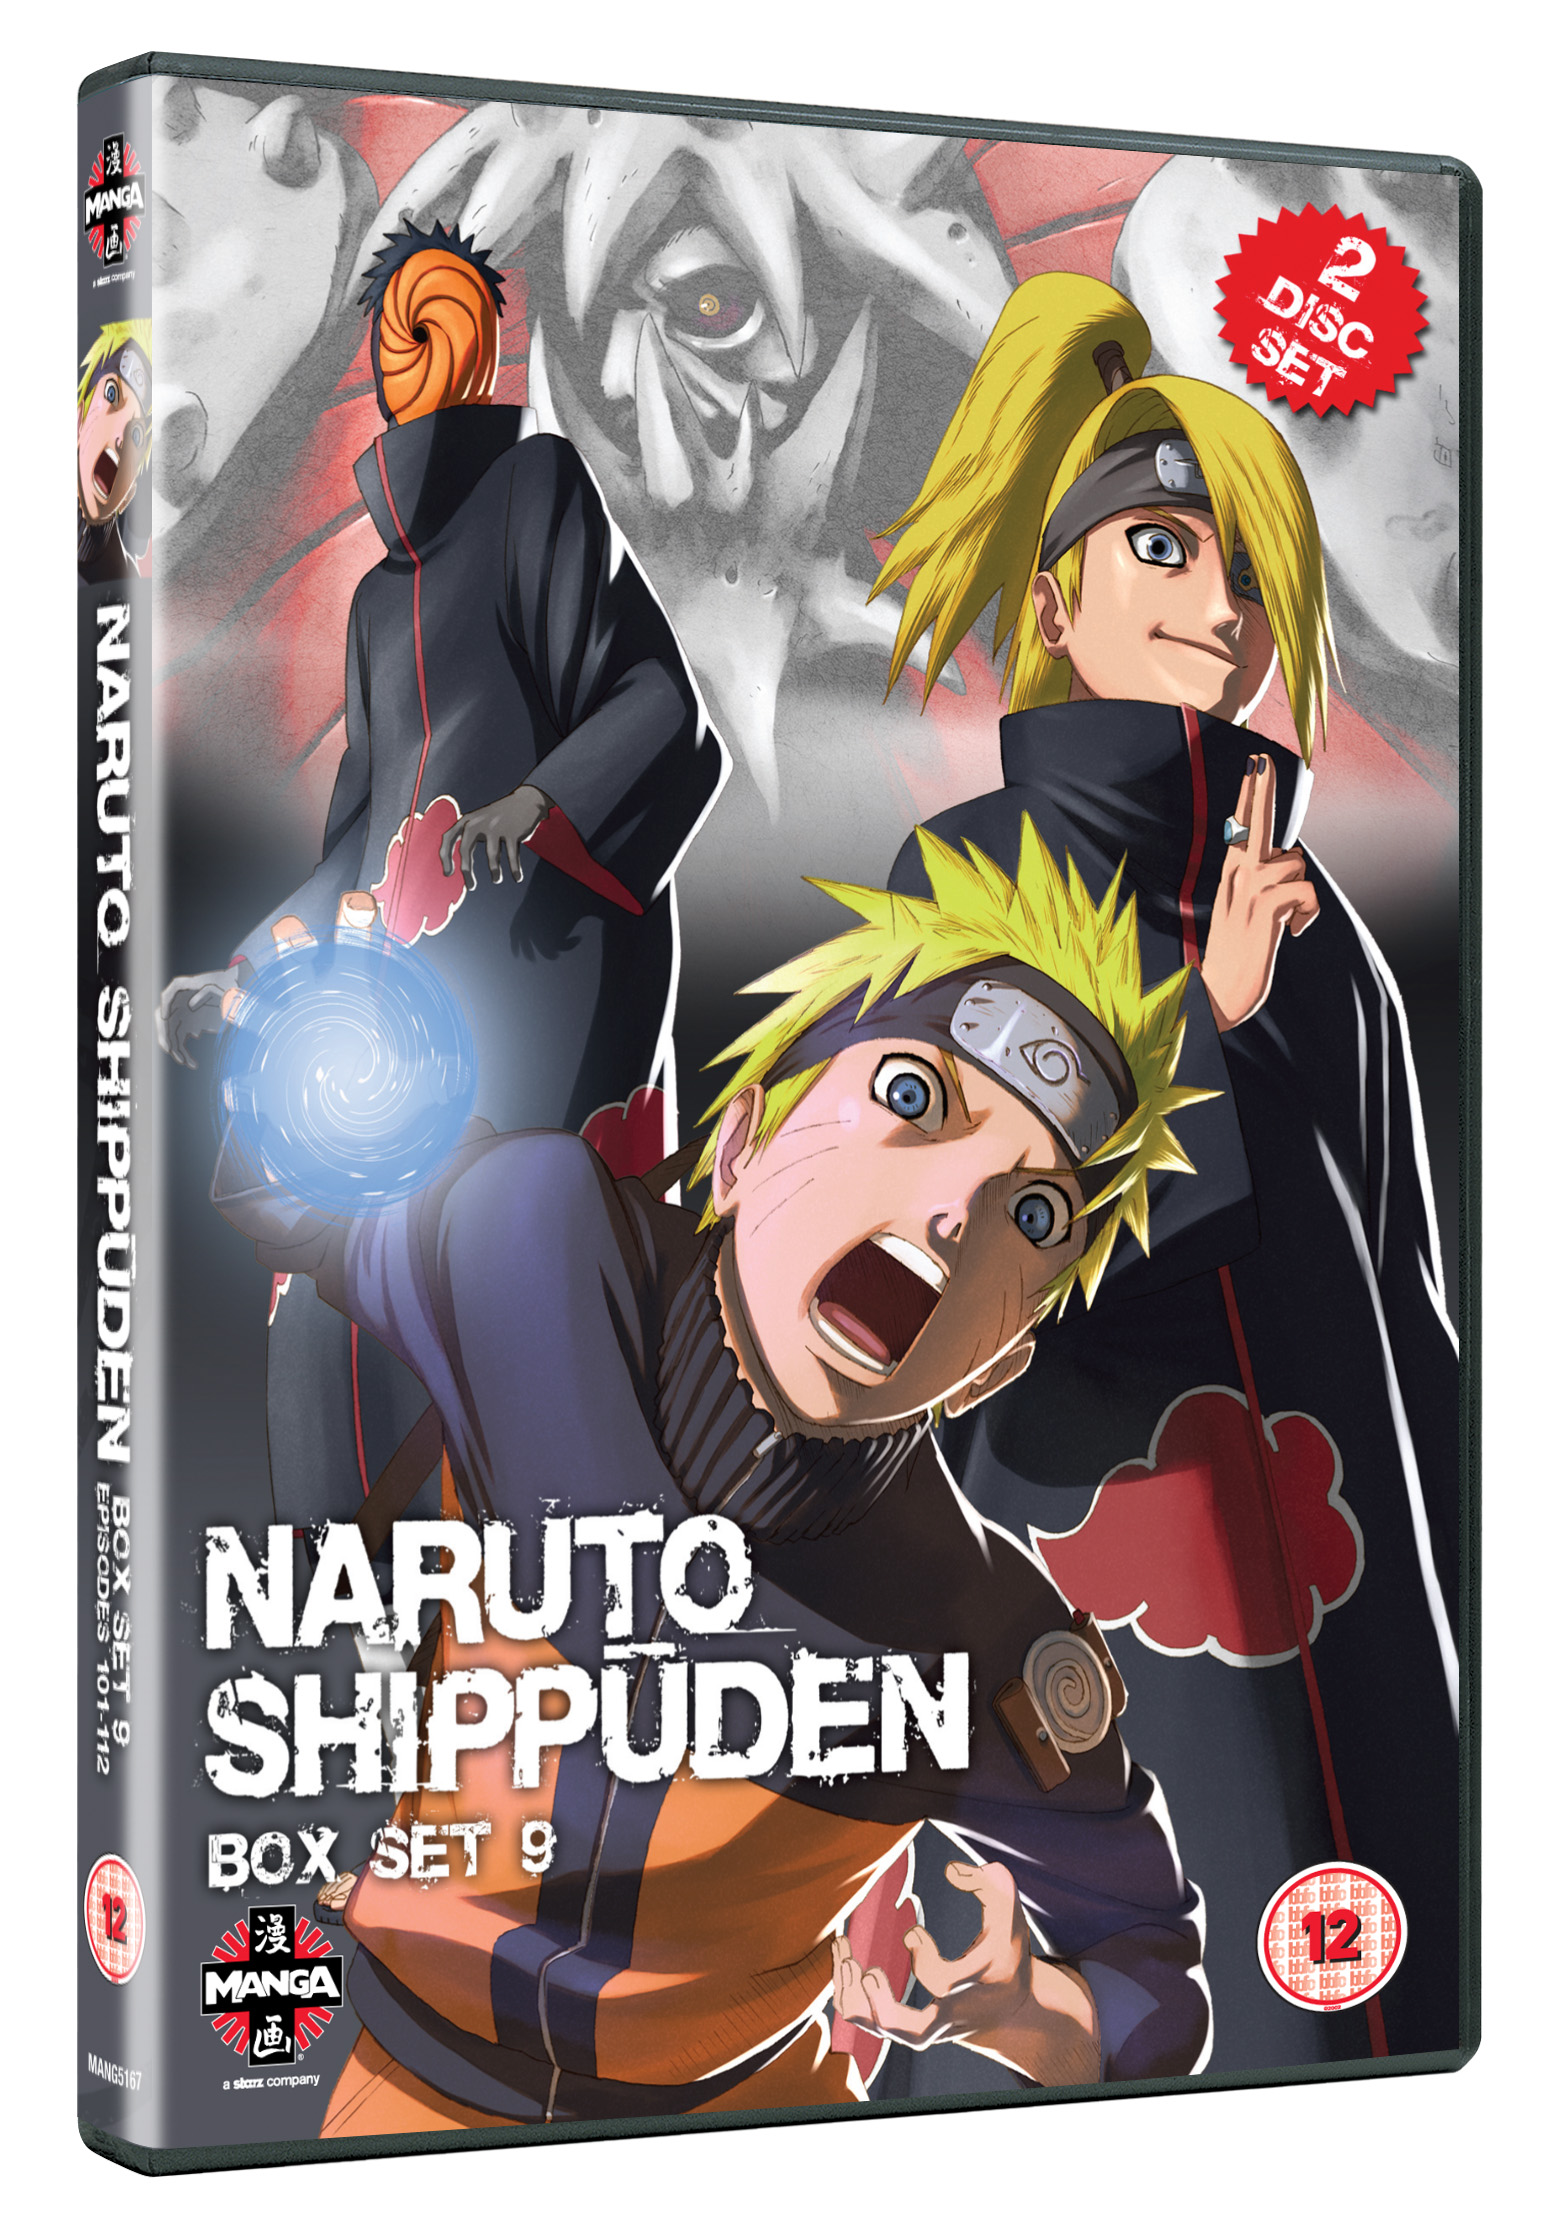 Dvd Review Naruto Shippuden Box Set 9 The Anime Chronicle